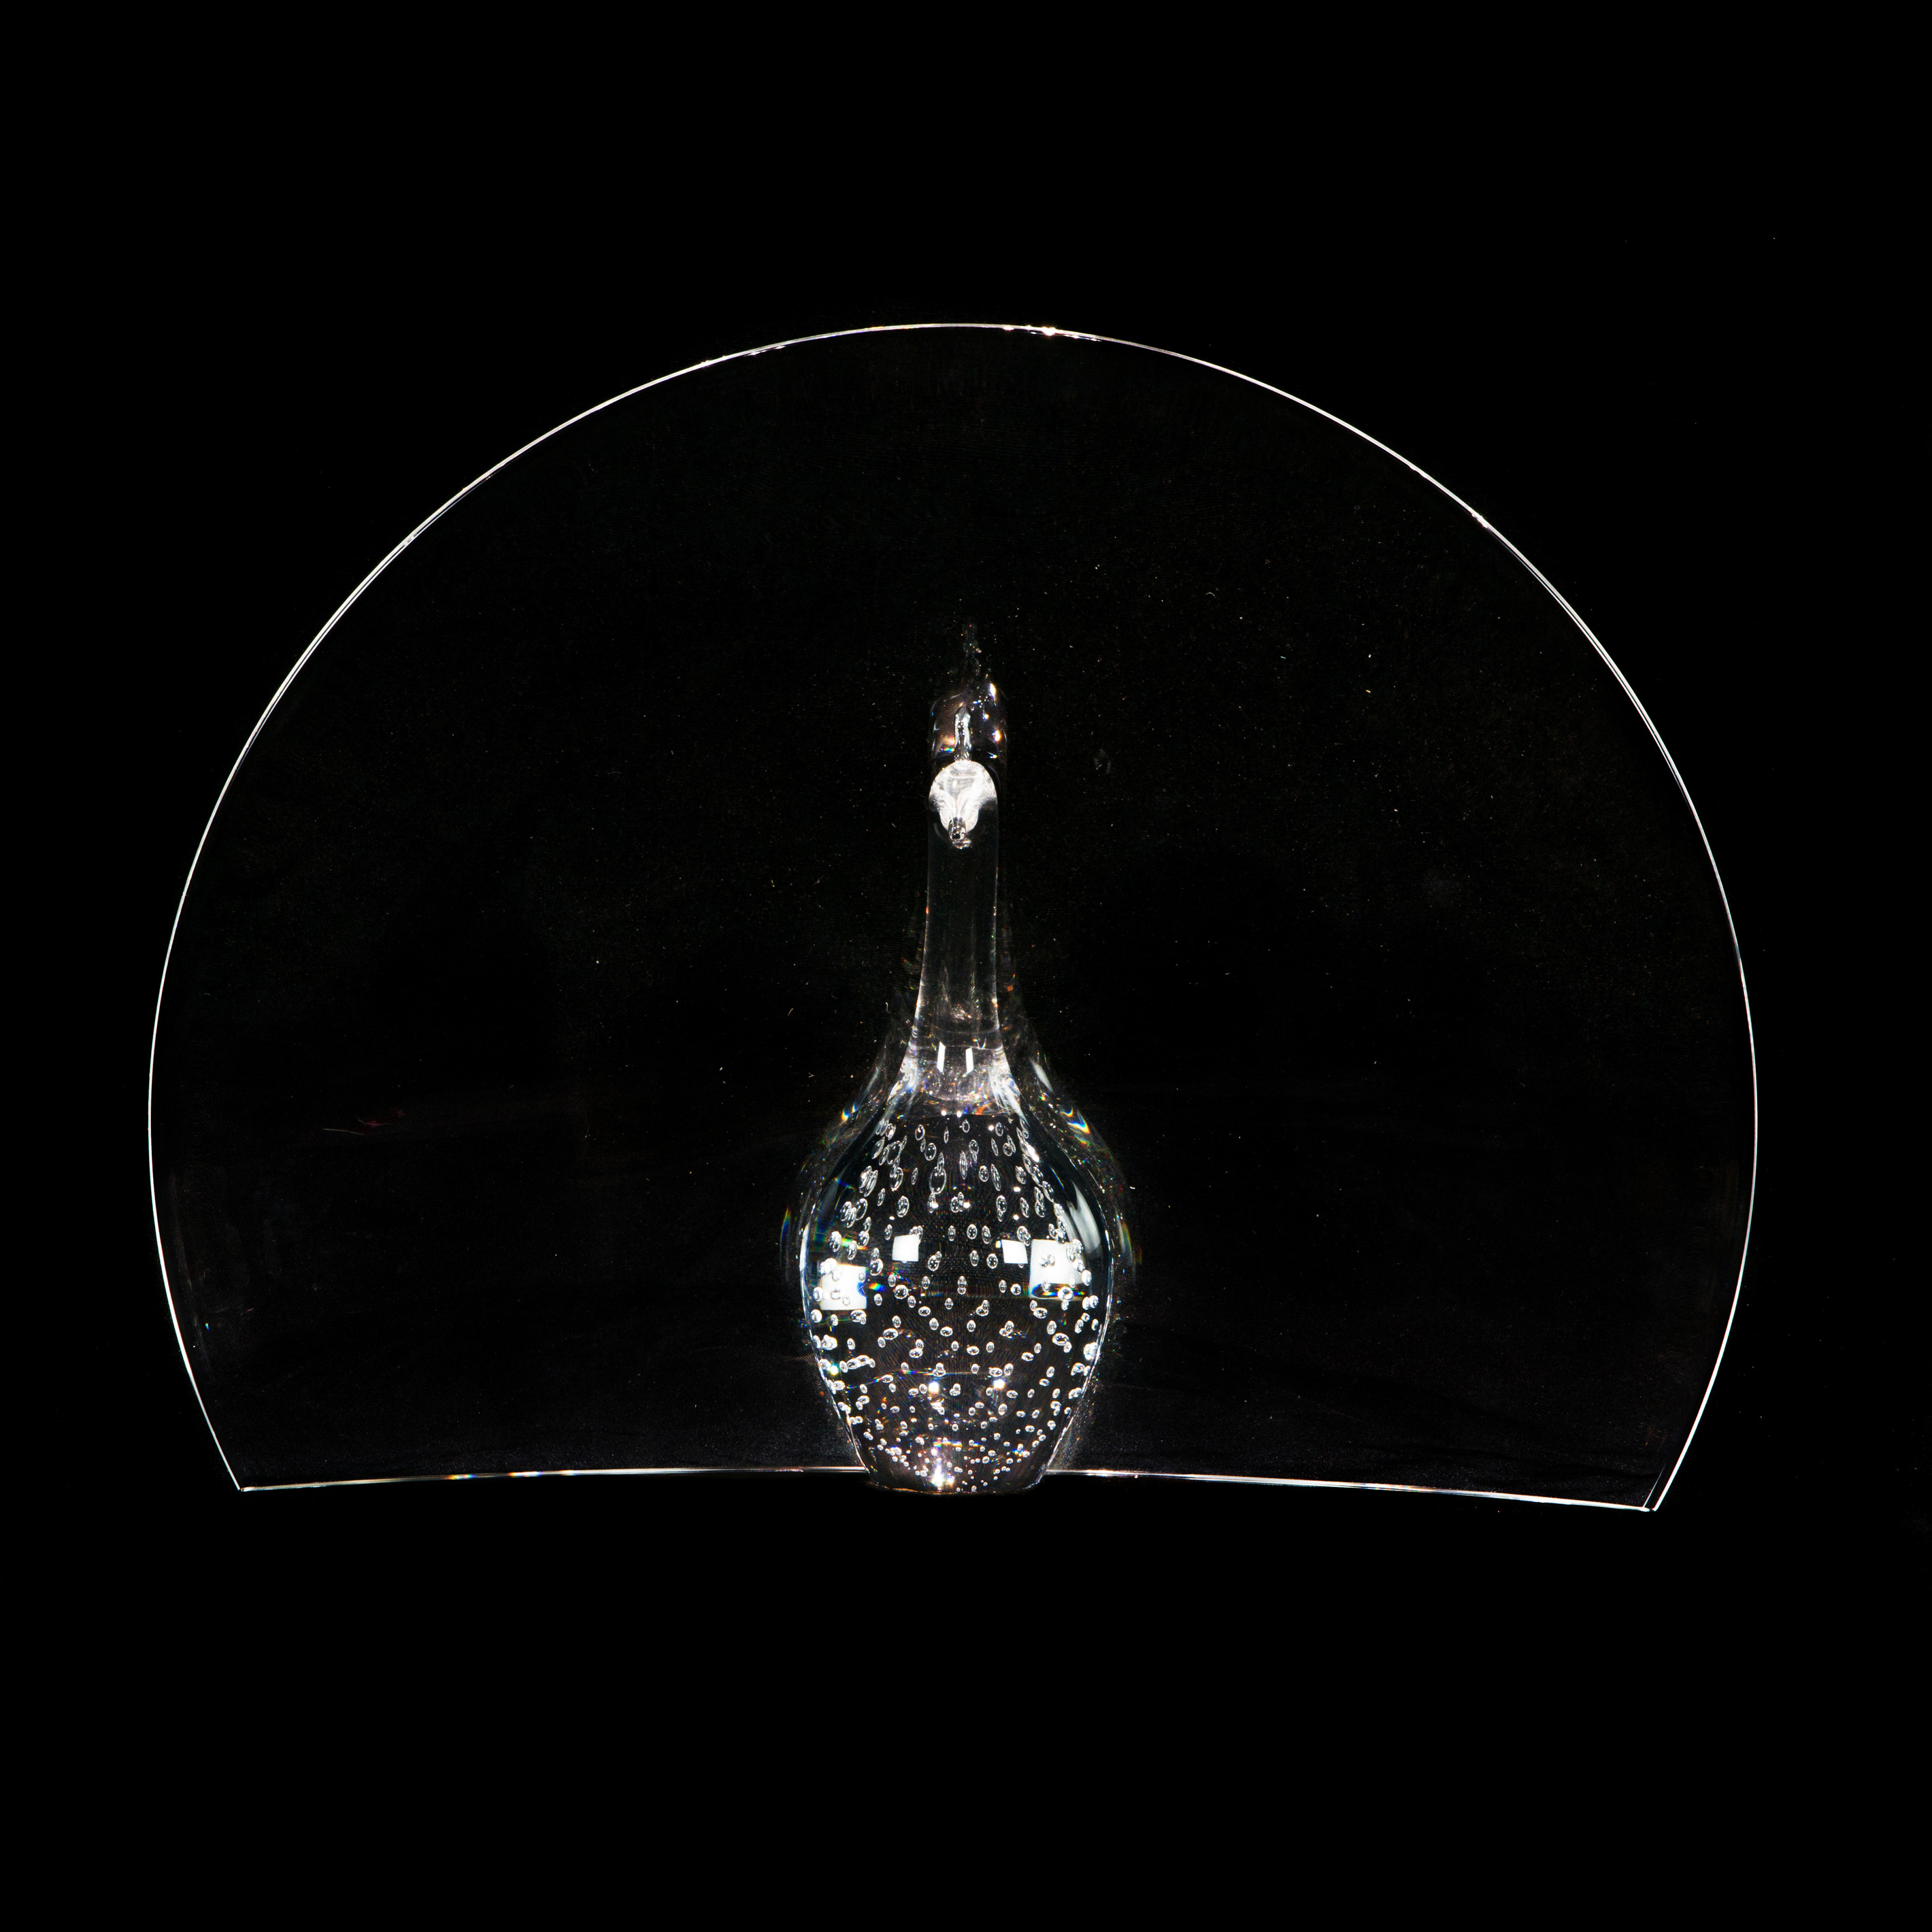 A STEUBEN GLASS PEACOCK DESIGNED 2d1b86